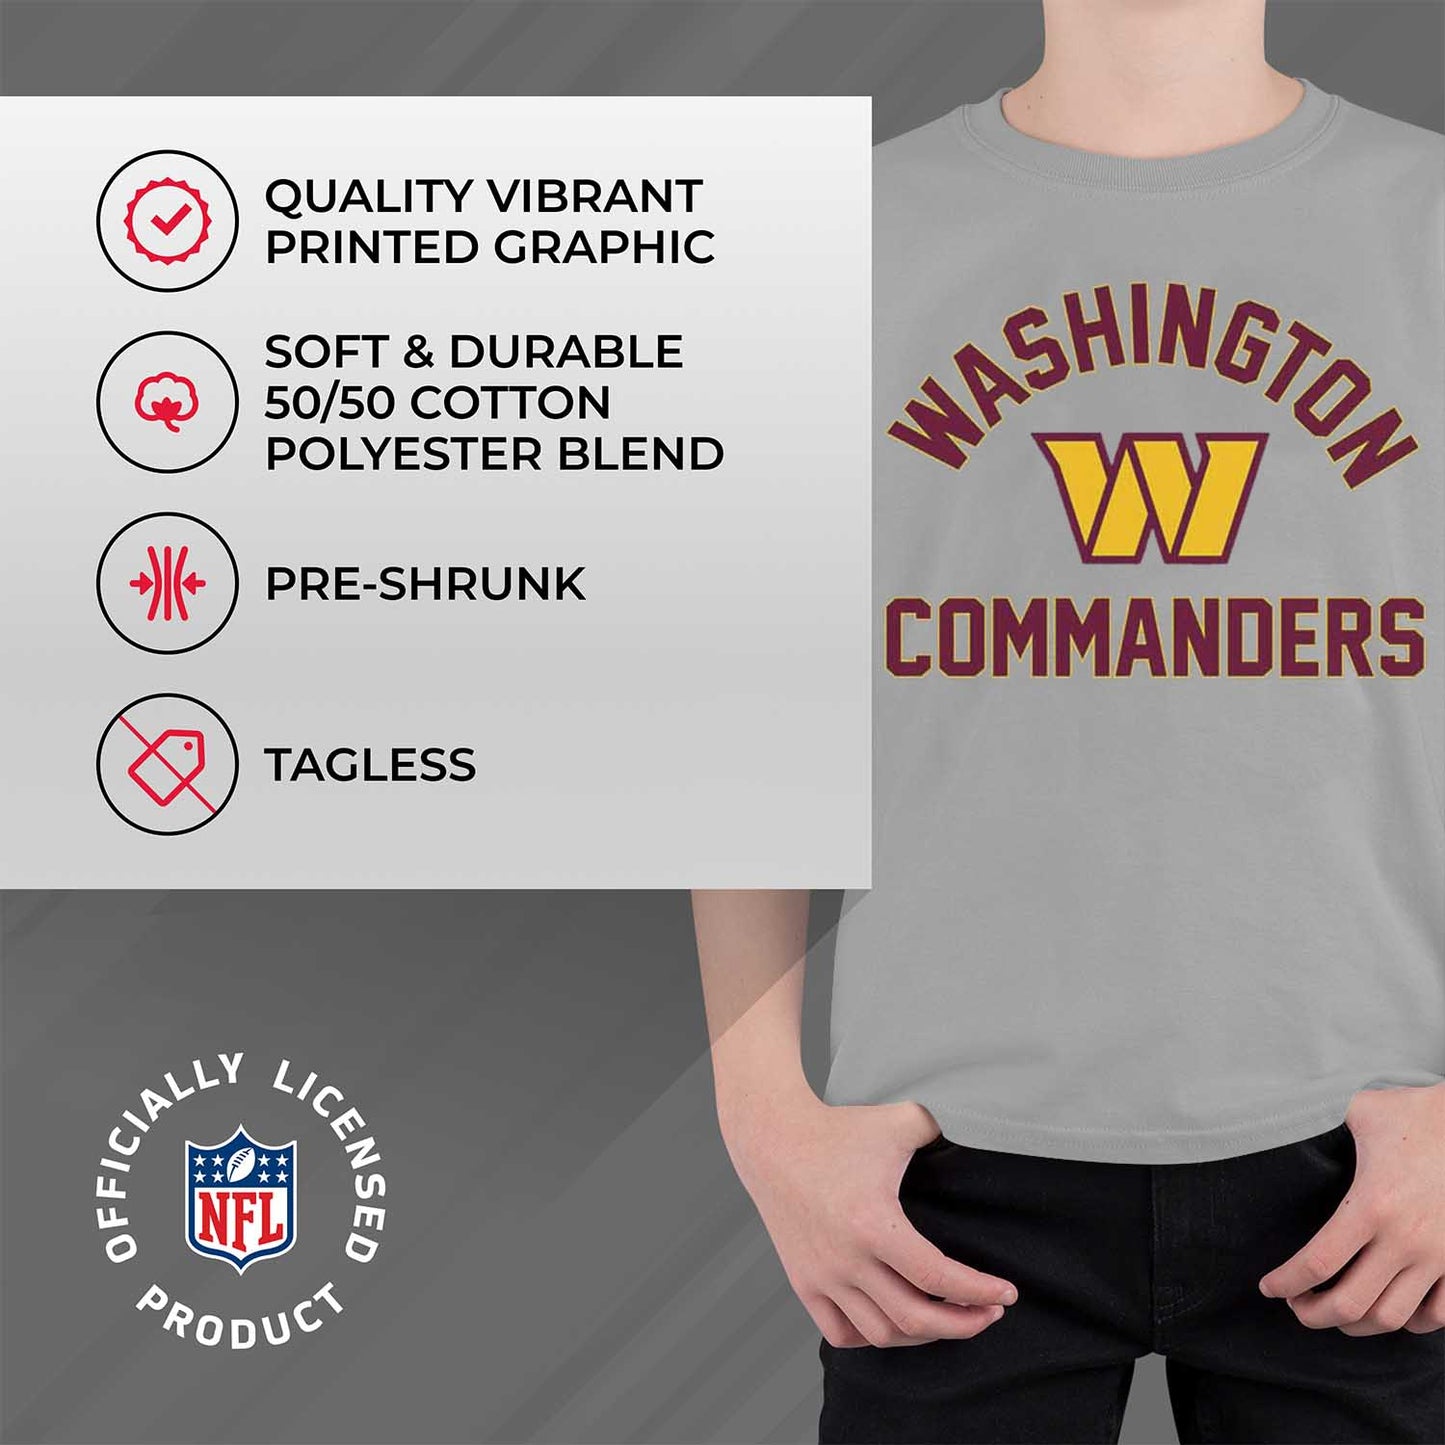 Washington Commanders NFL Youth Gameday Football T-Shirt - Sport Gray